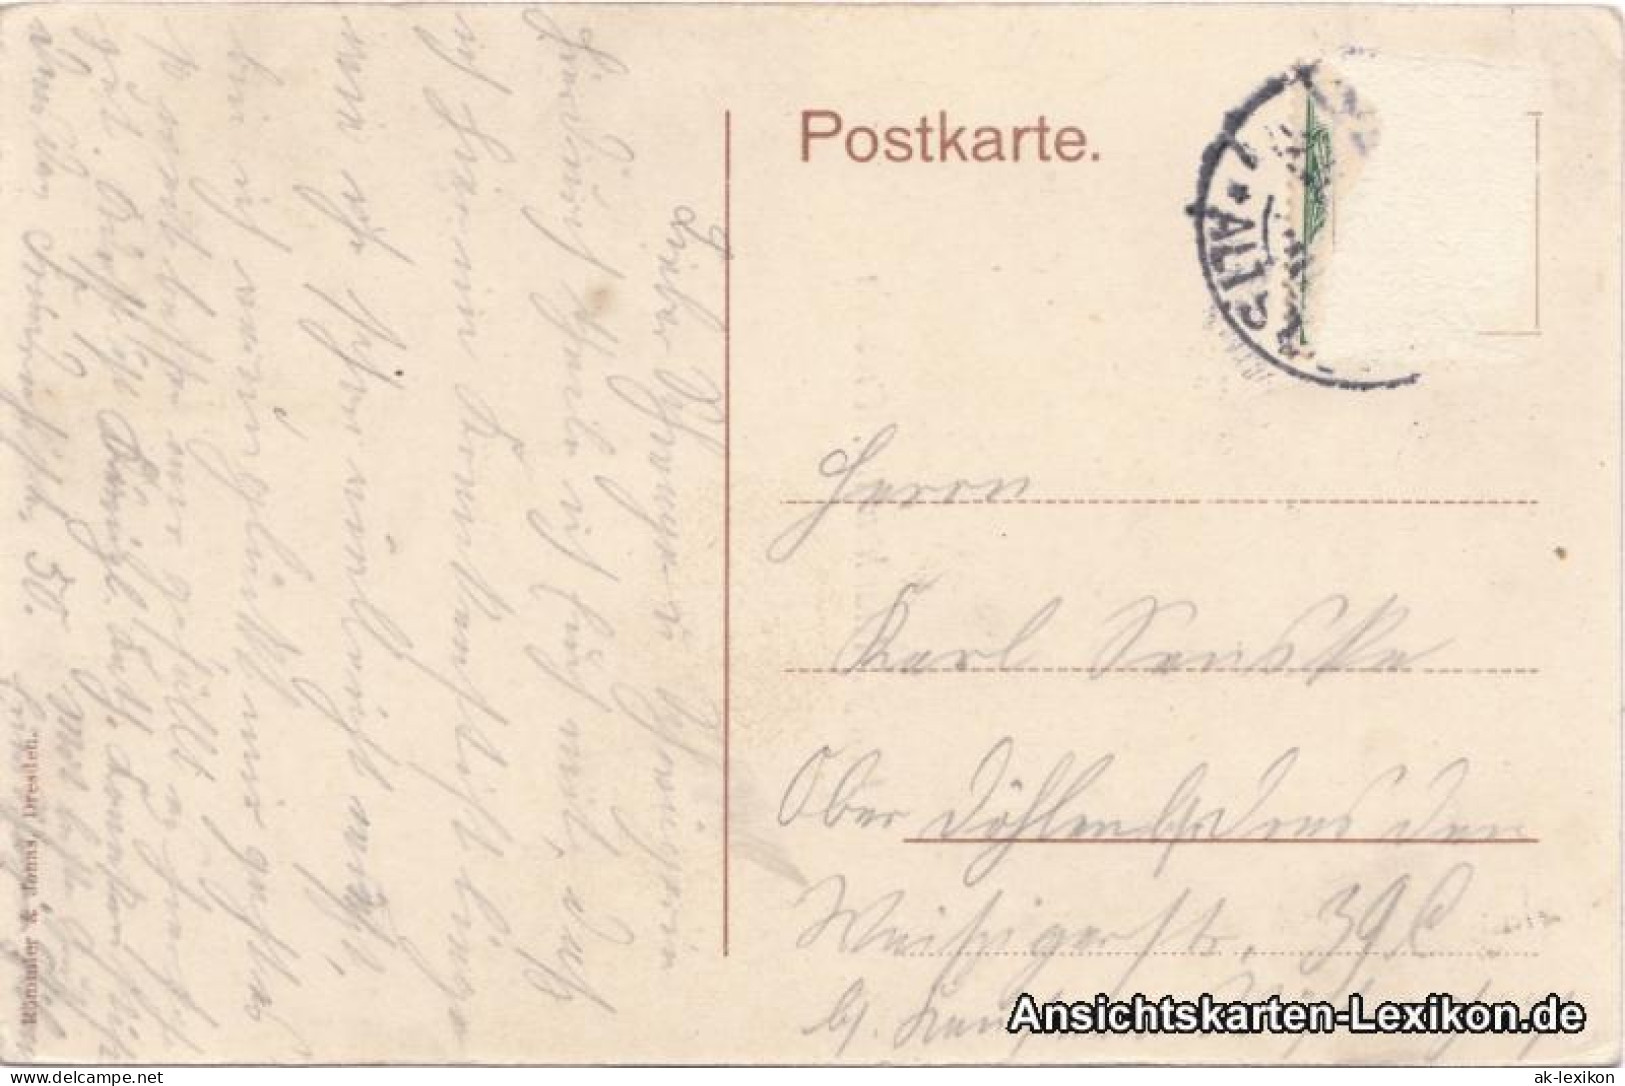 Ansichtskarte Johannstadt-Dresden Königl. Krankenstift 1914  - Dresden